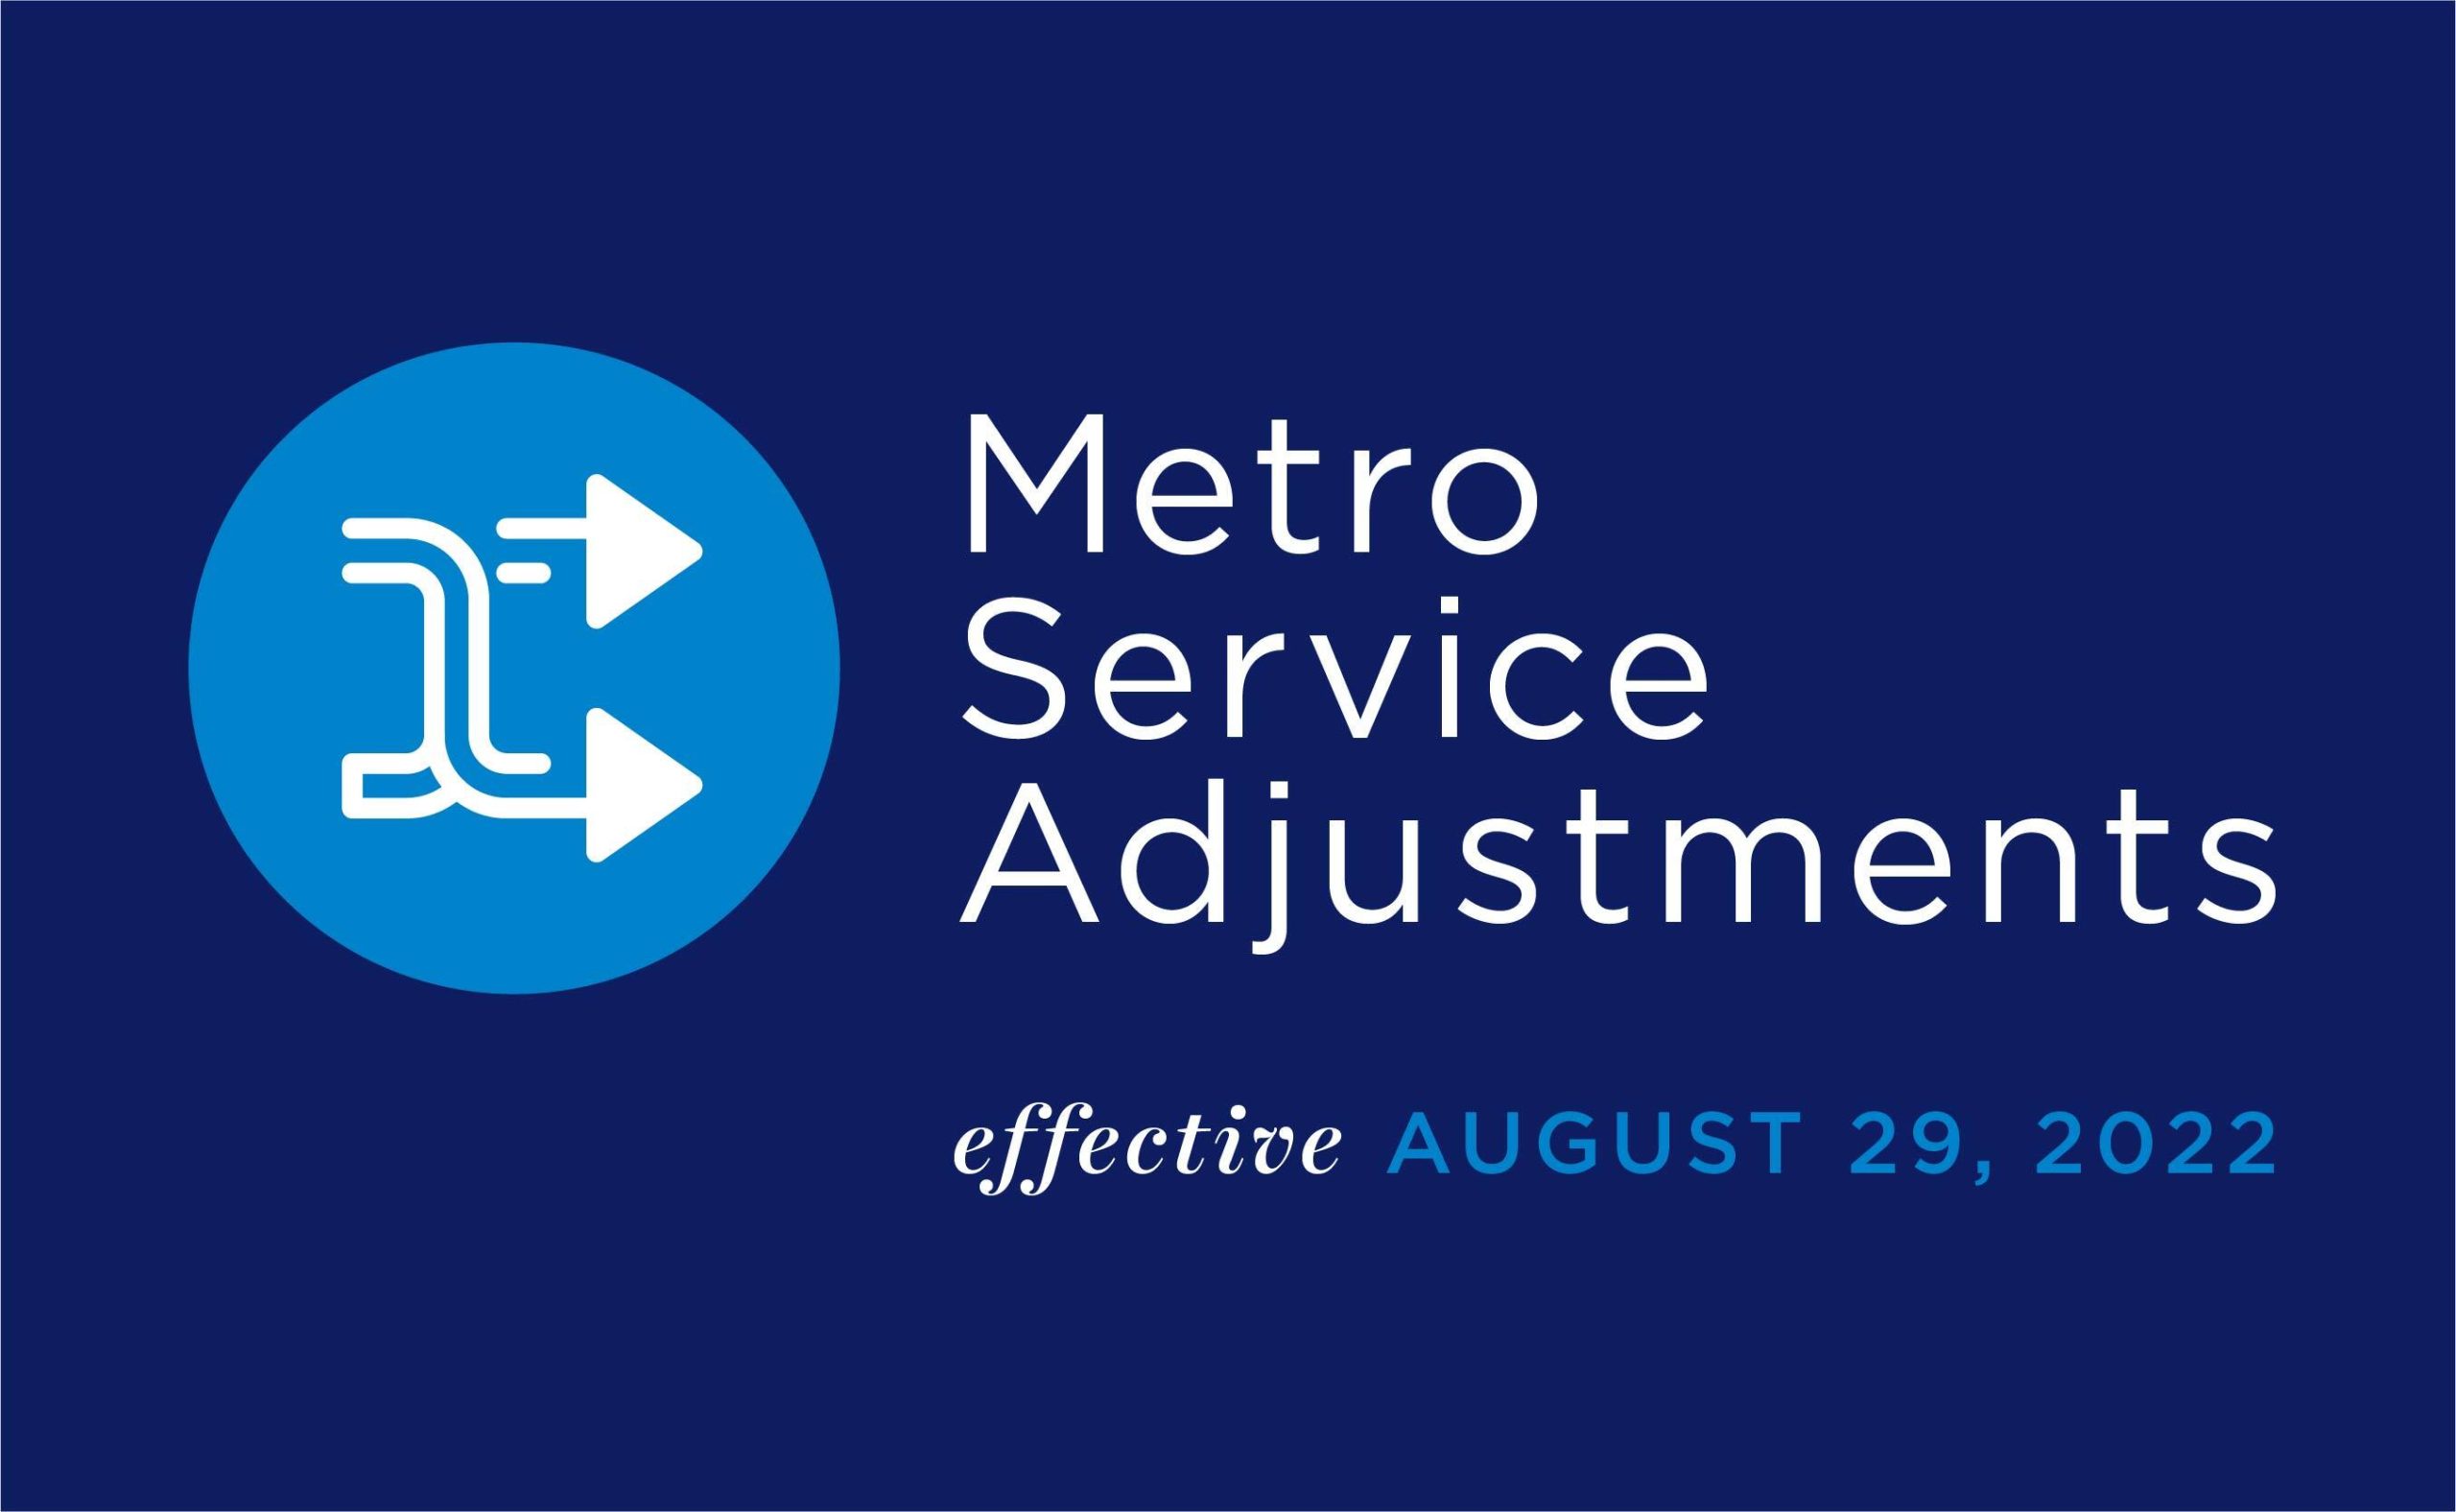 Metro Service Adjustments effective August 29